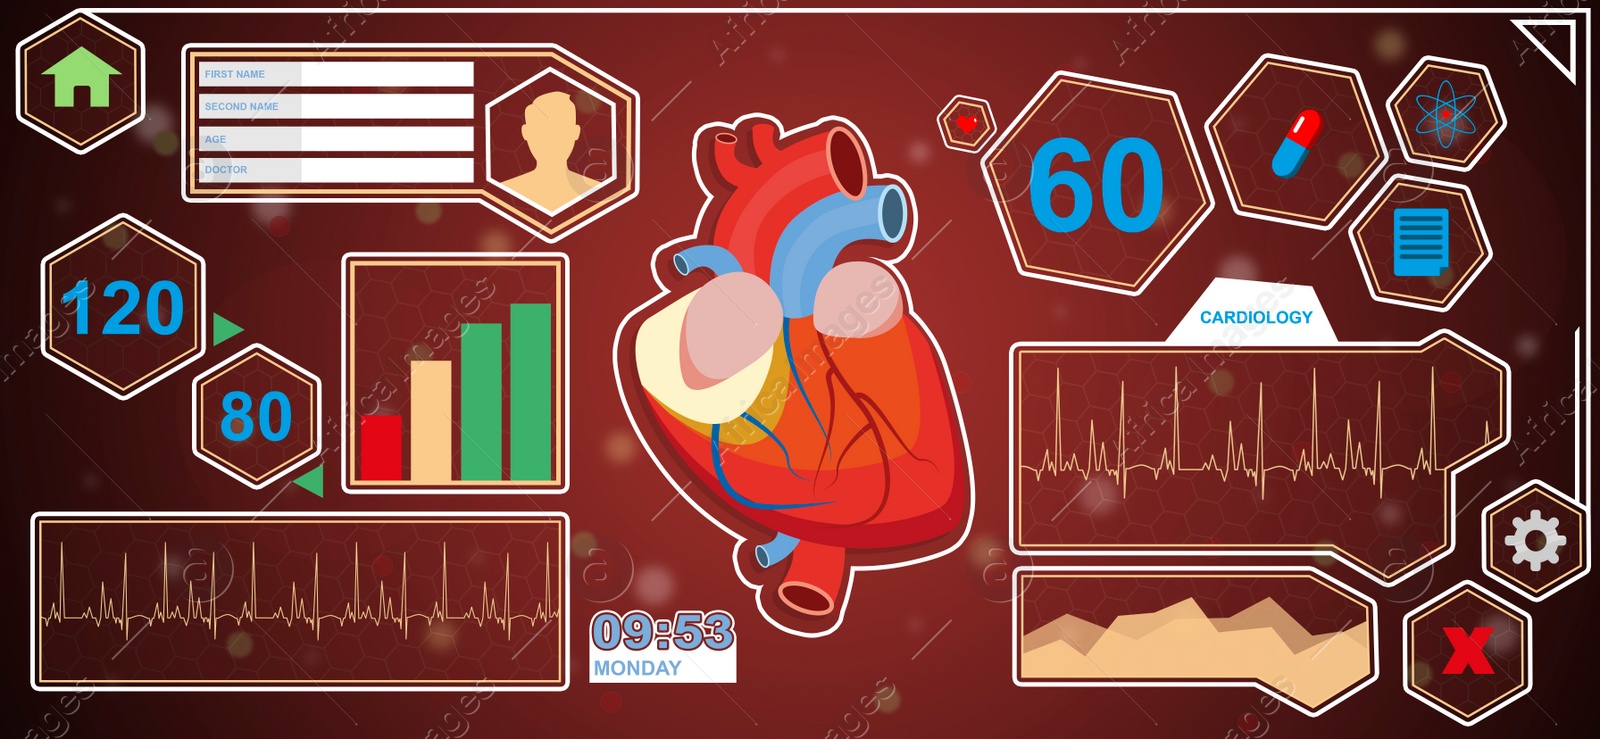 Illustration of Interface of medical application cardiological diagnostic, illustration